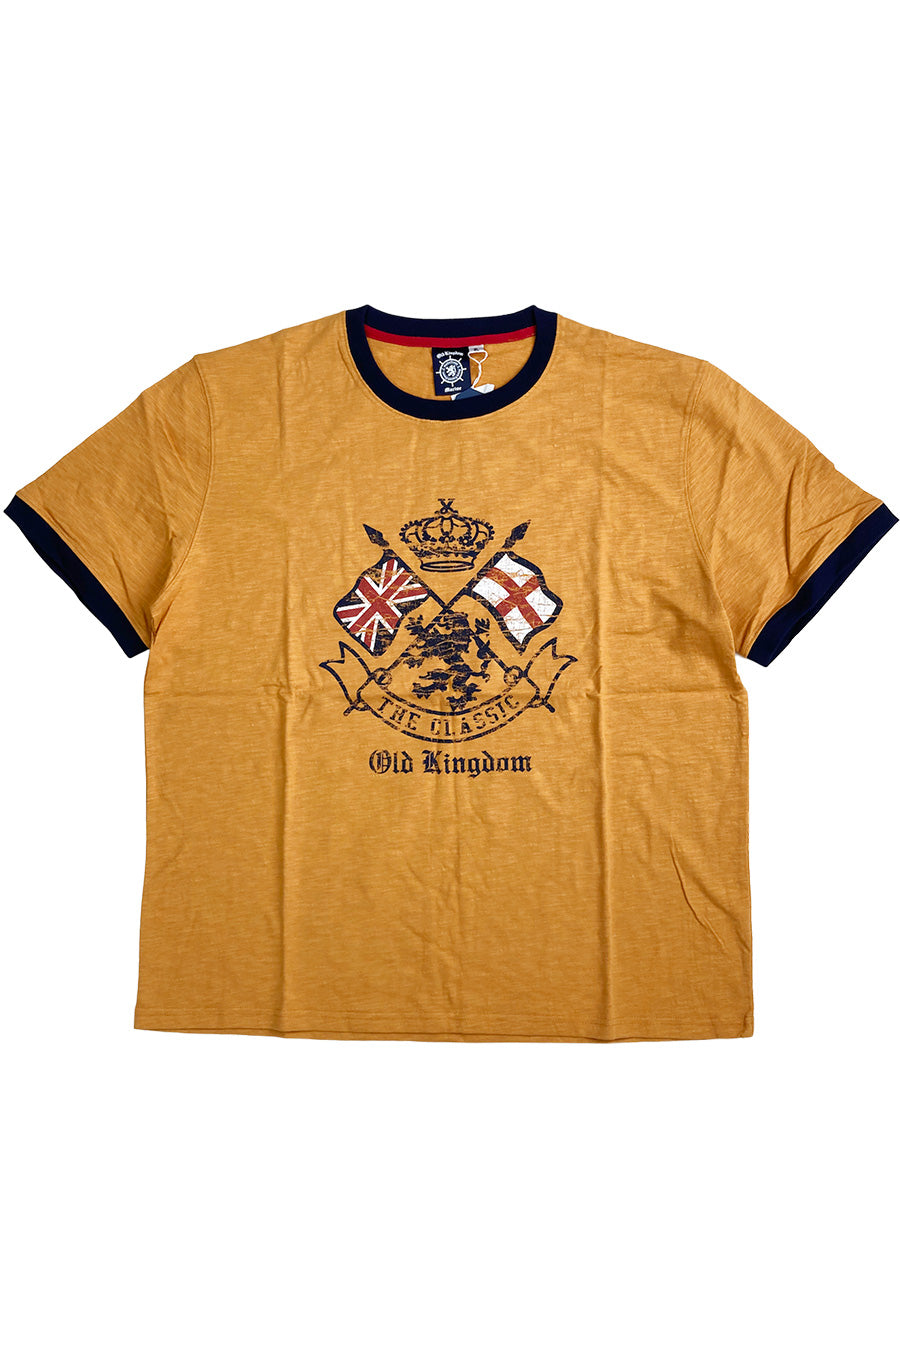 [Sale] [OUTLET] KING SIZE King Size BIG SIZE Big Size Slub Tenjiku Ringer T-shirt Large Size Loose 2L 3L 4L 5L 6L American Casual Casual